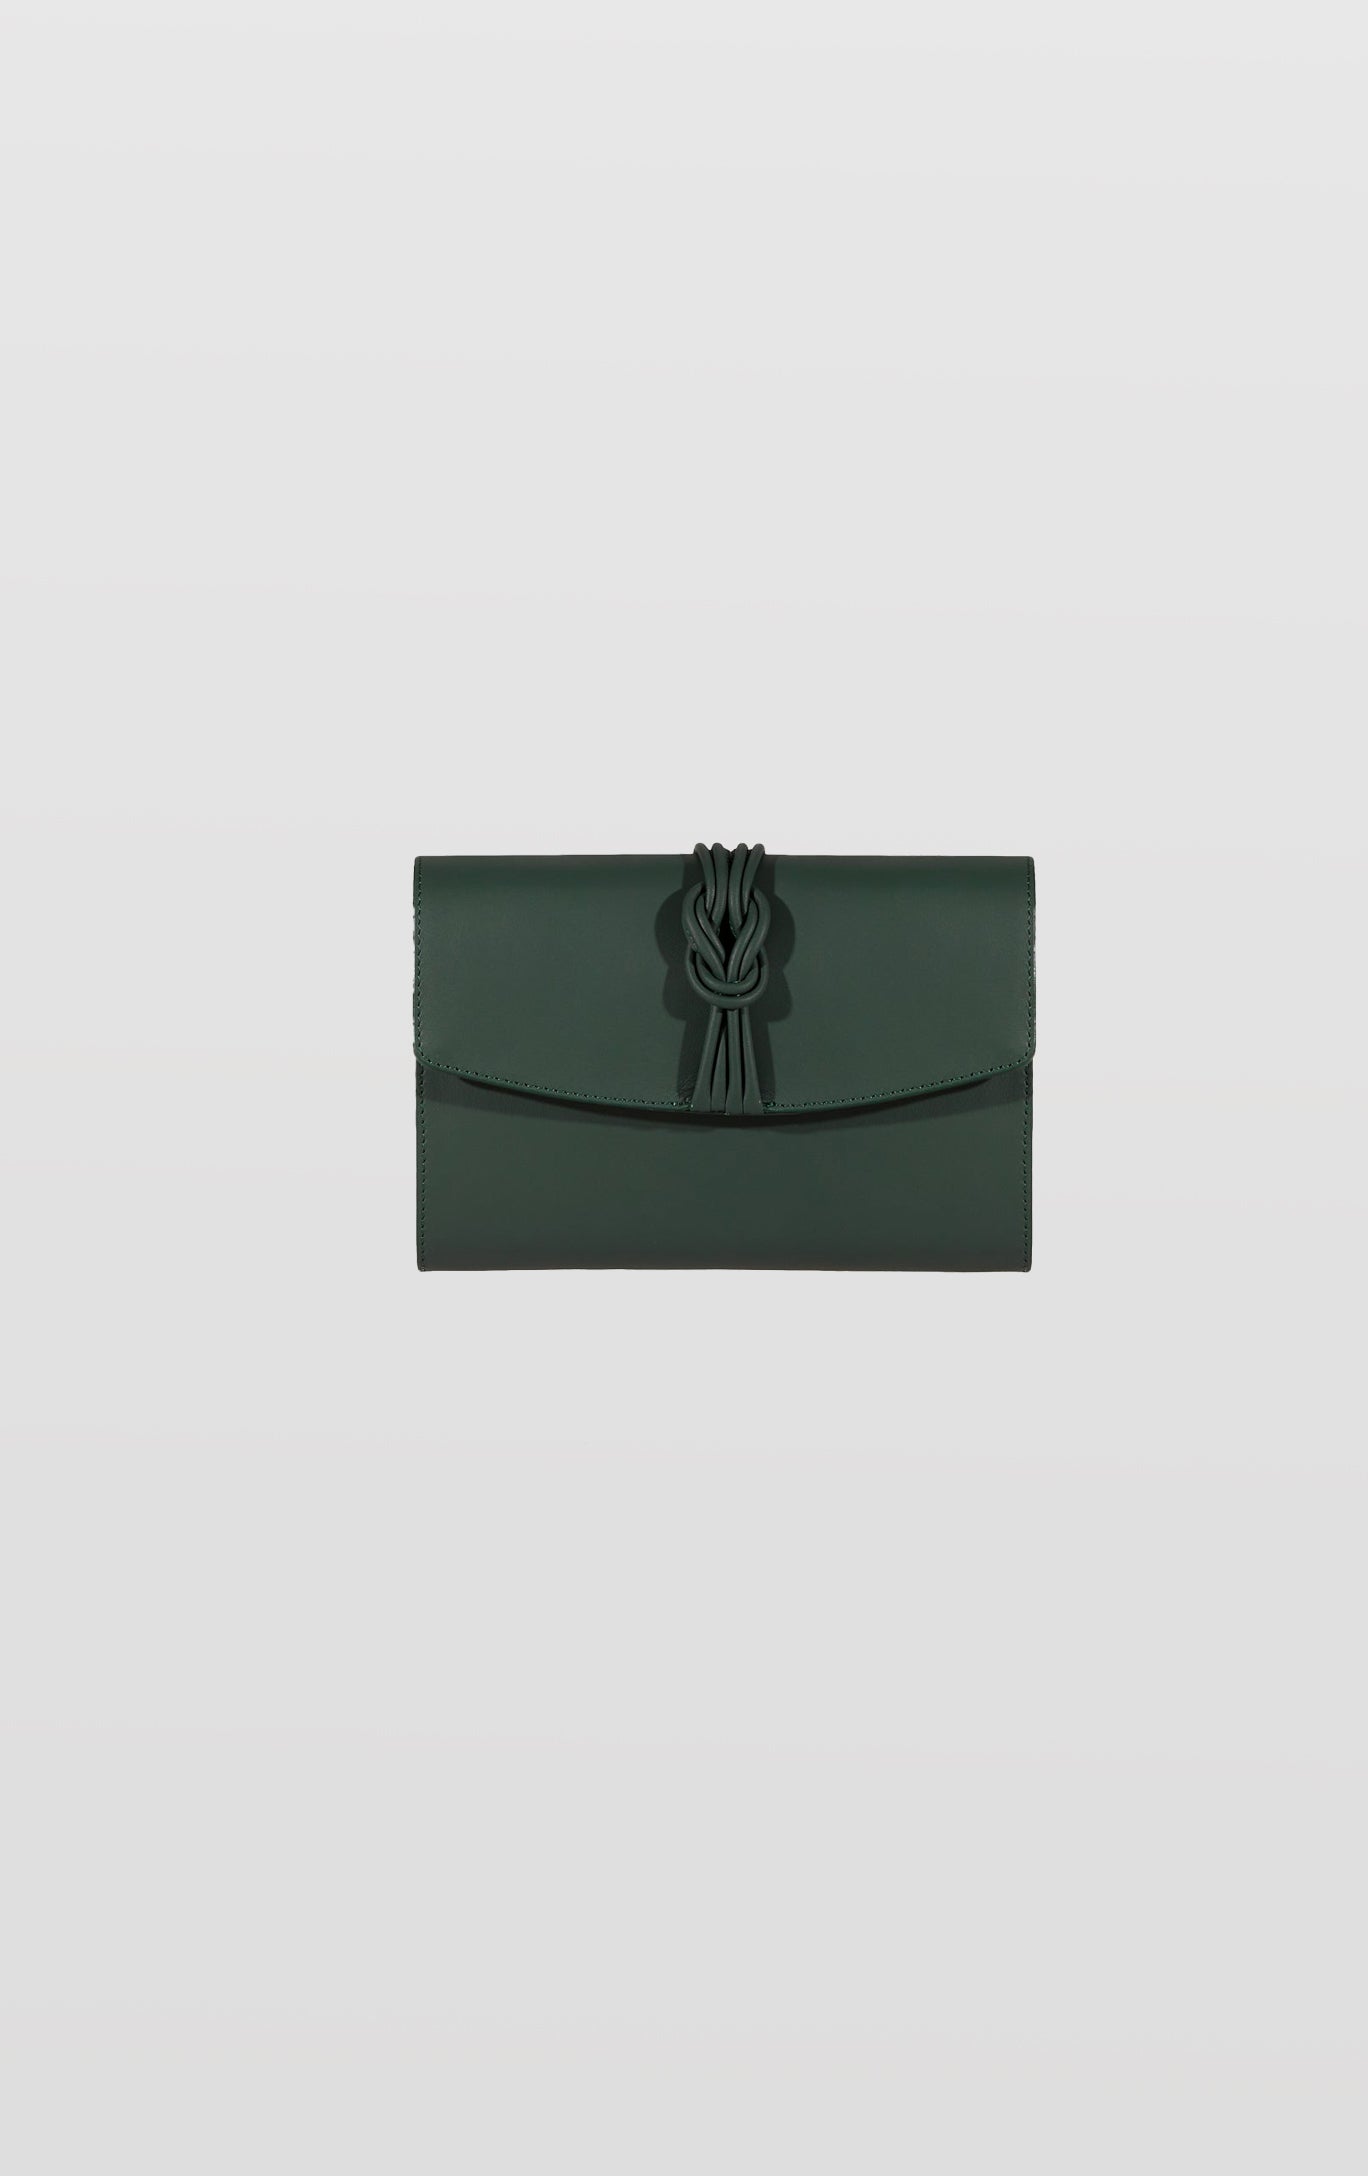 Midi Marylebone, Teal Green Clutch Bag